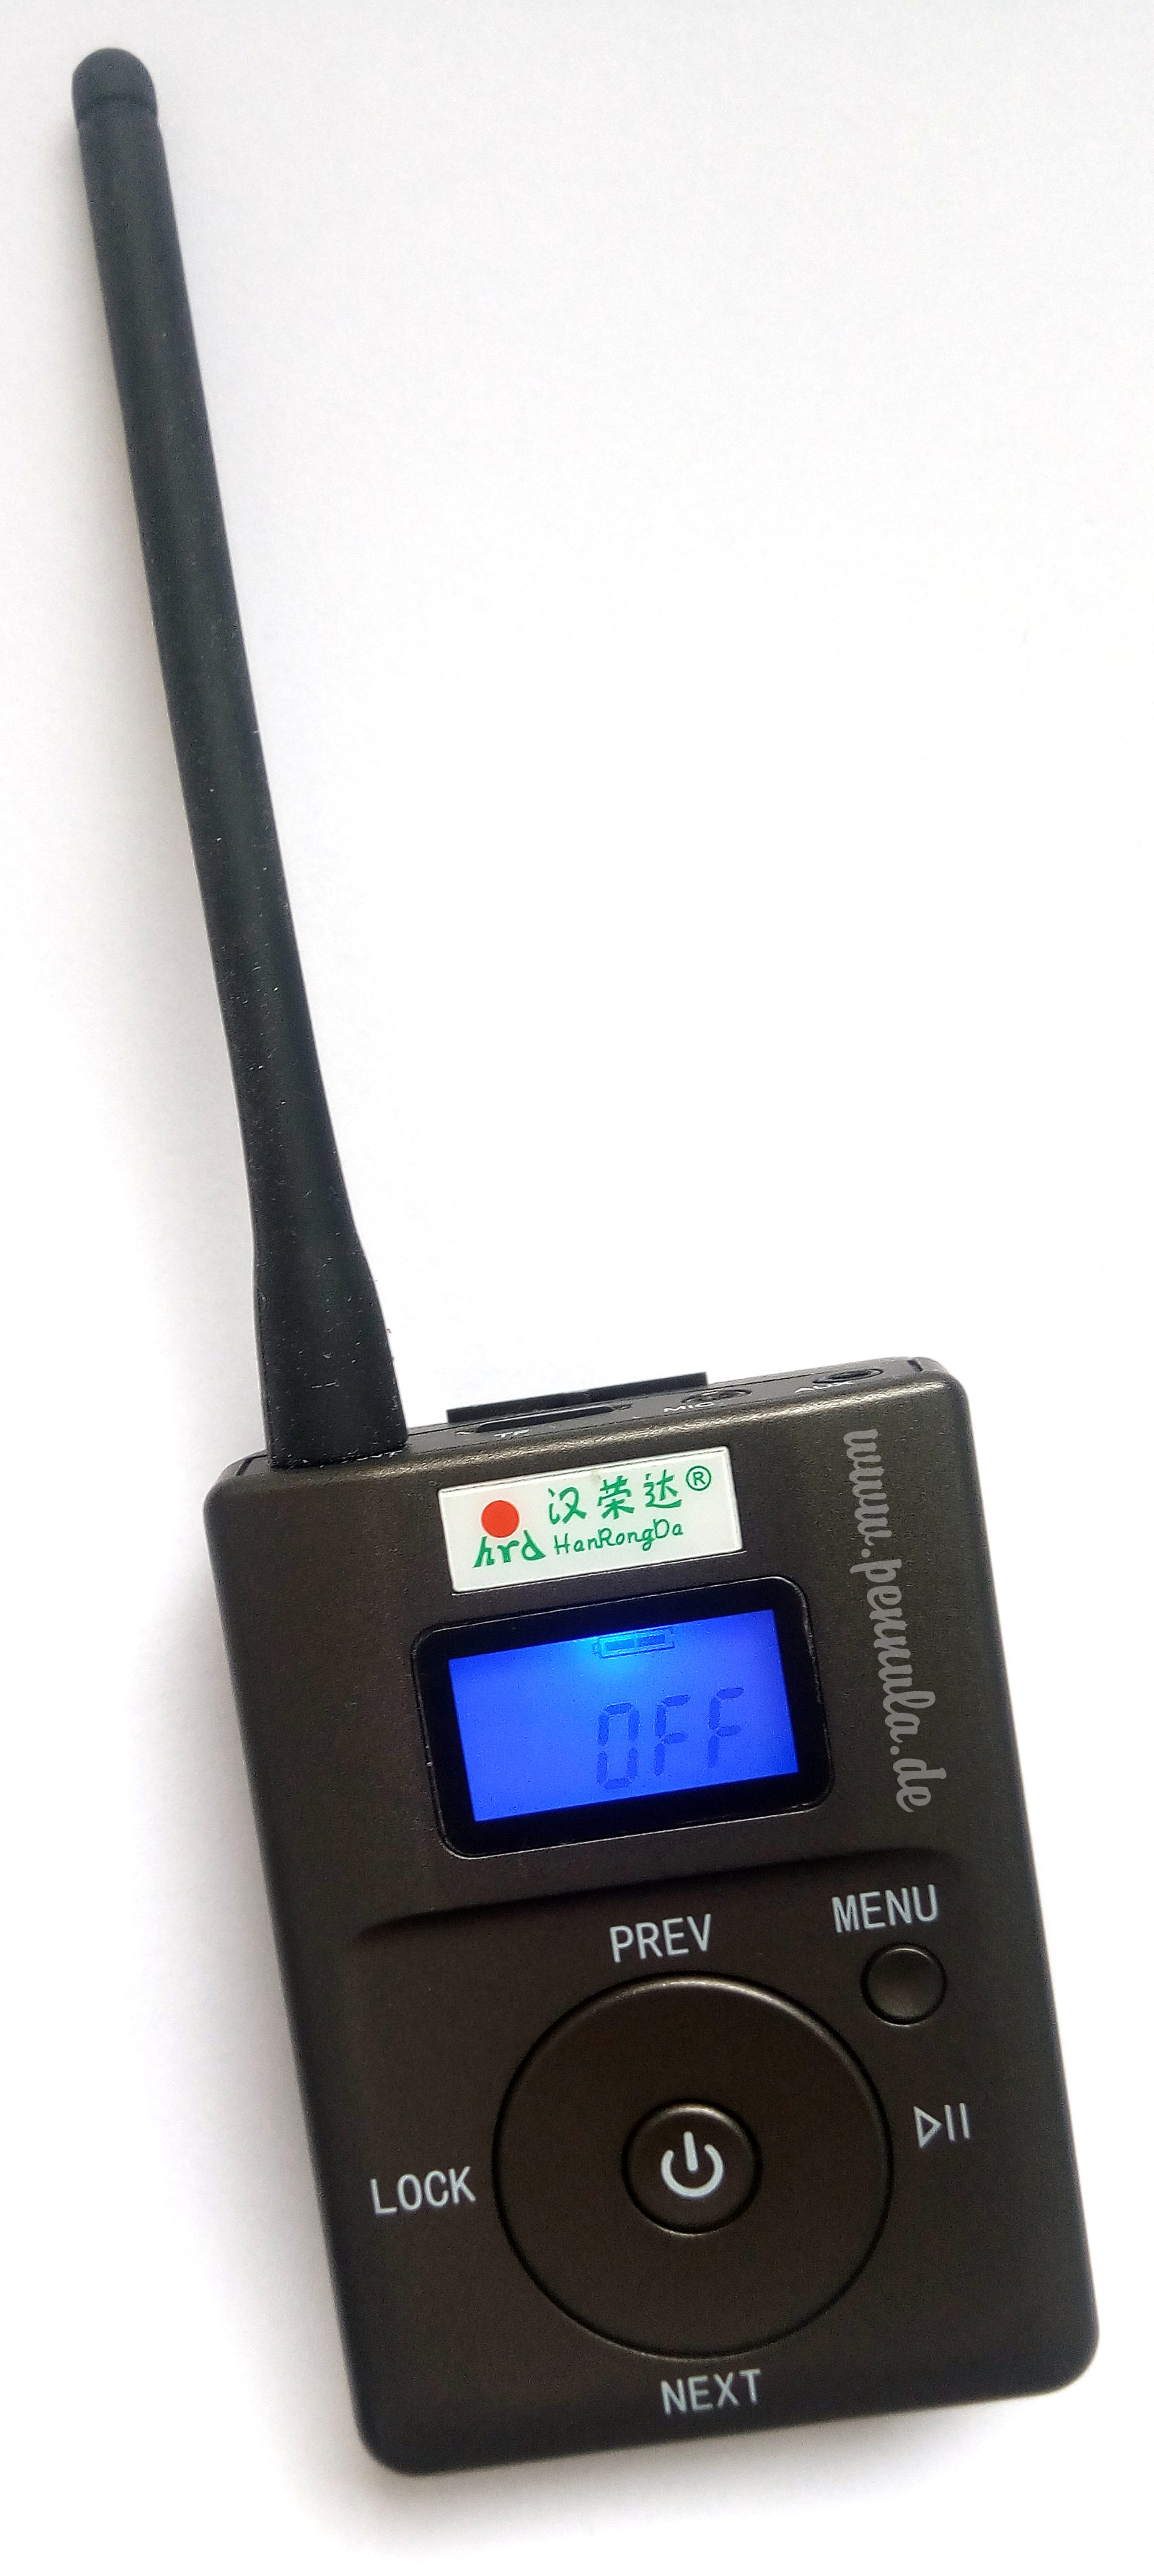 FM Transmitter Hanronda-Sender HRD-831 mit 200 Milliwatt ERP Sendeleistung